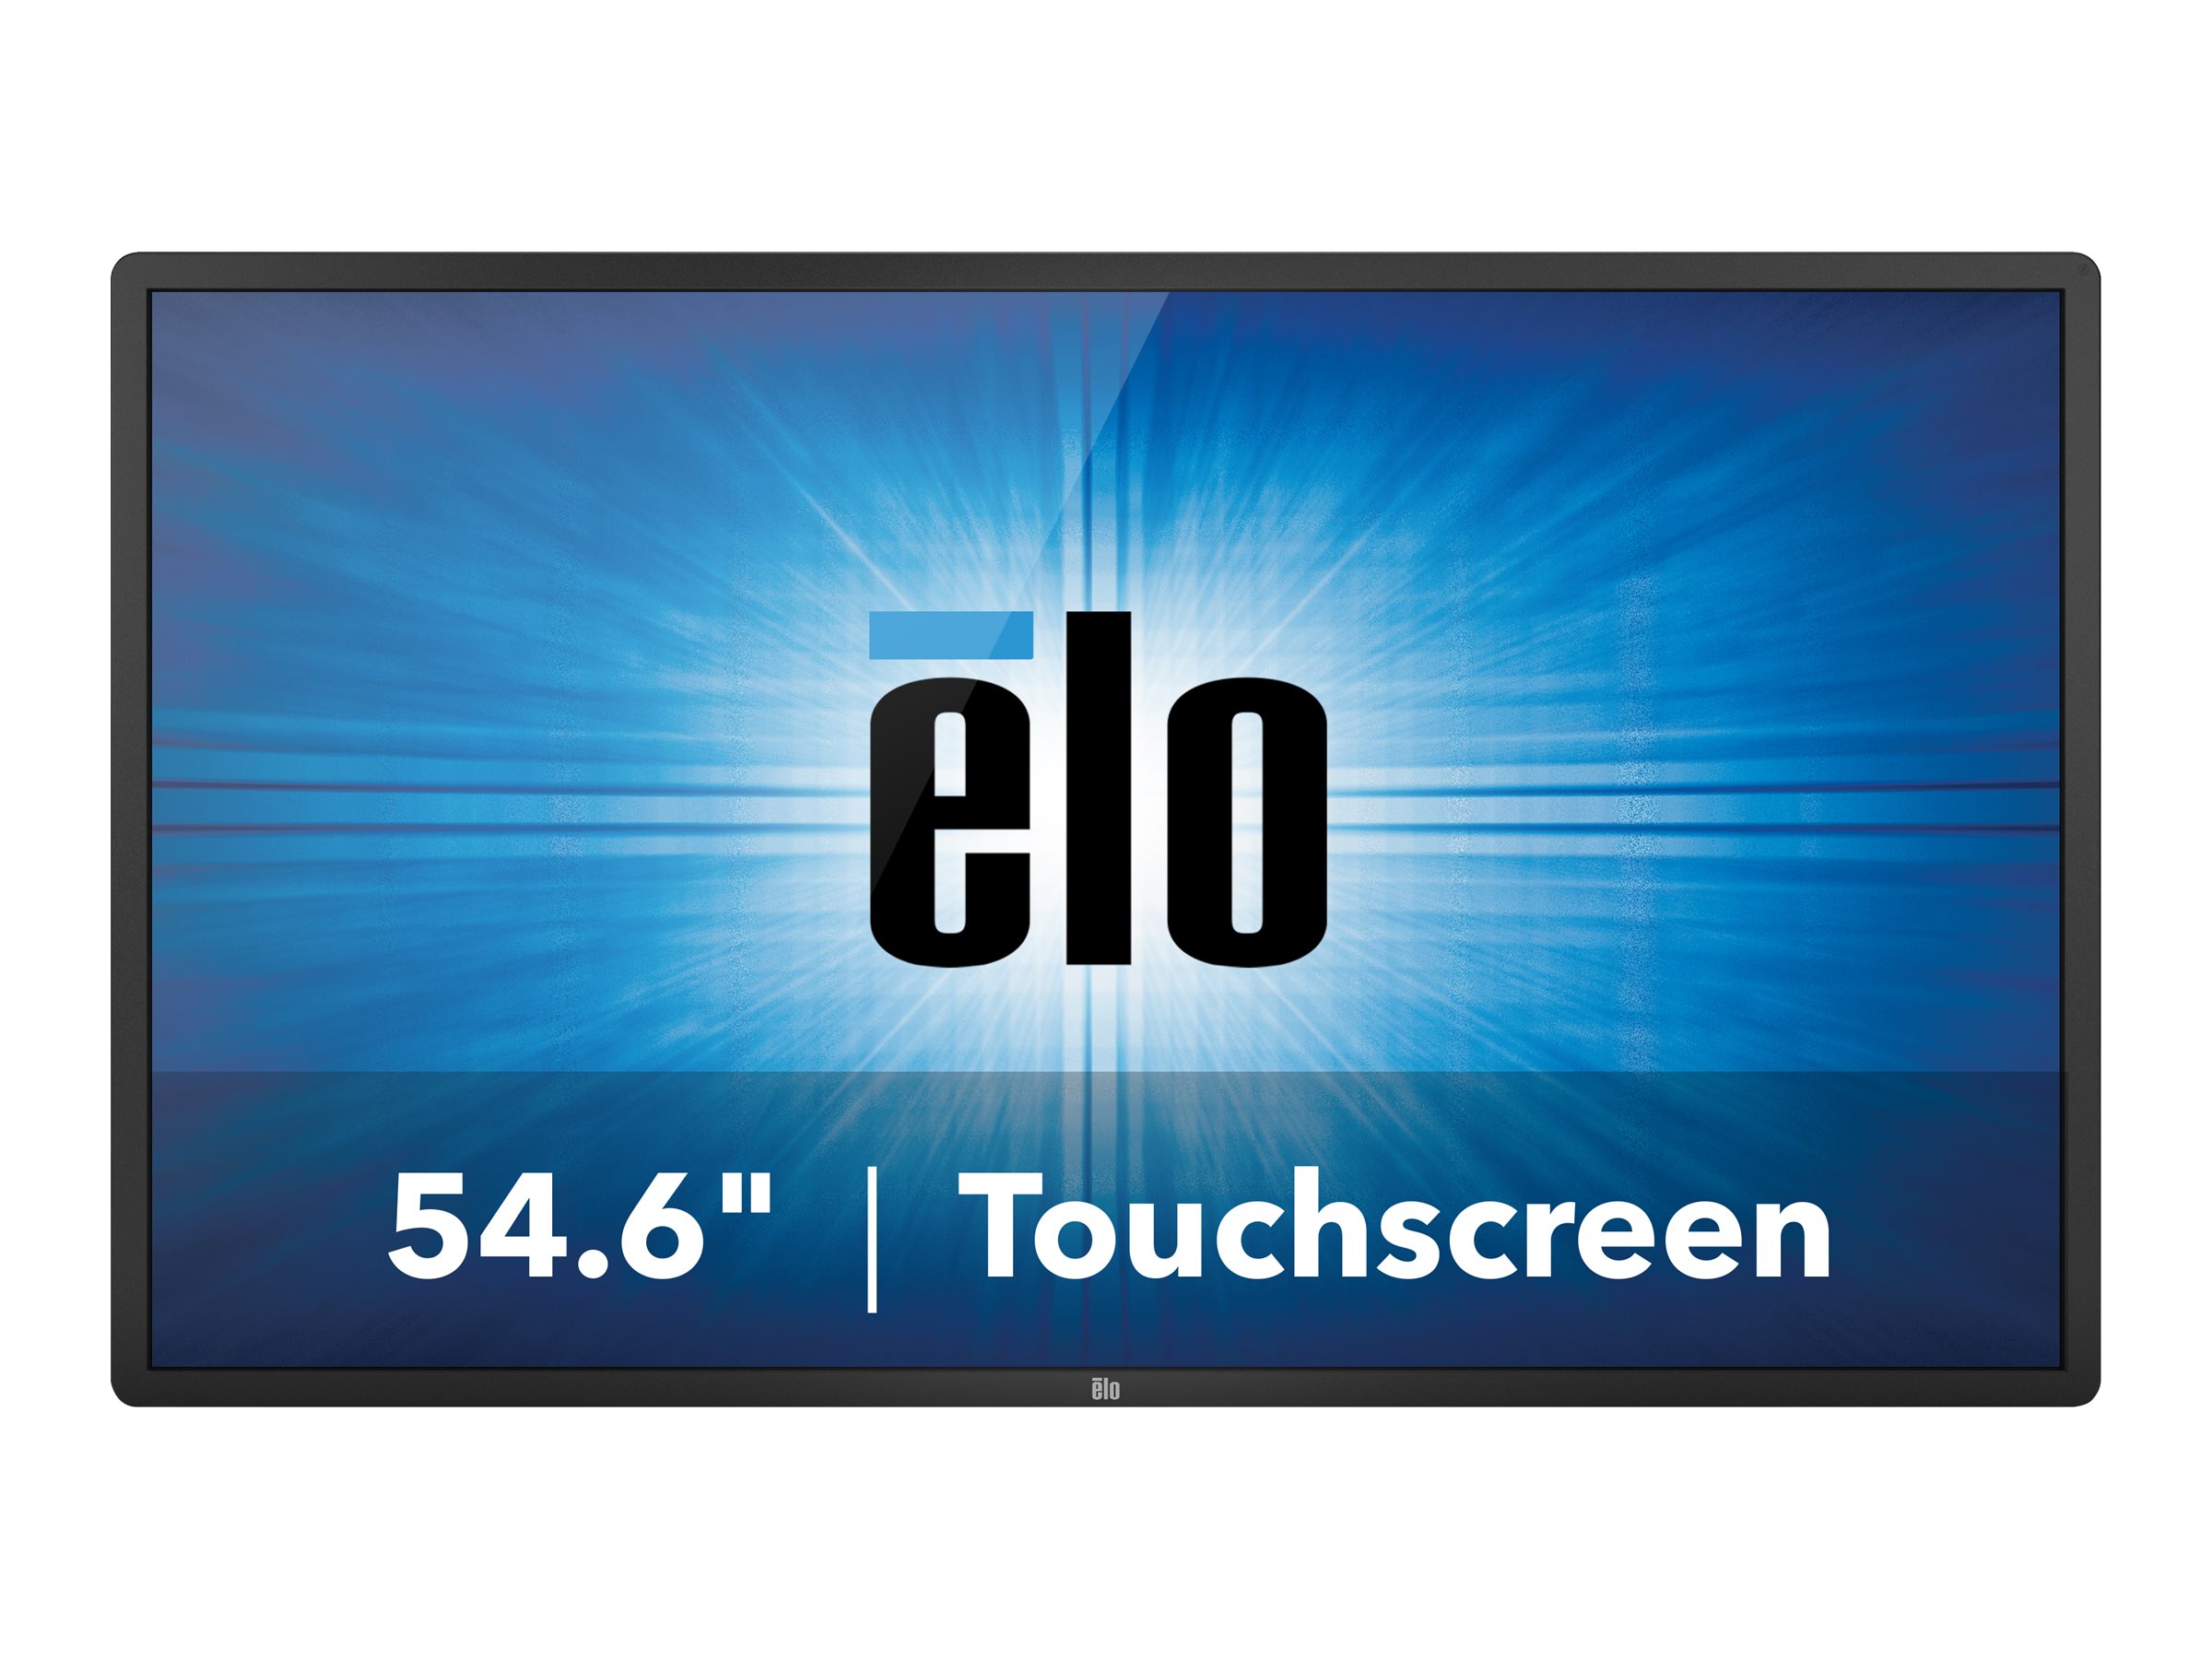 Elo Interactive Digital Signage Display 5551L